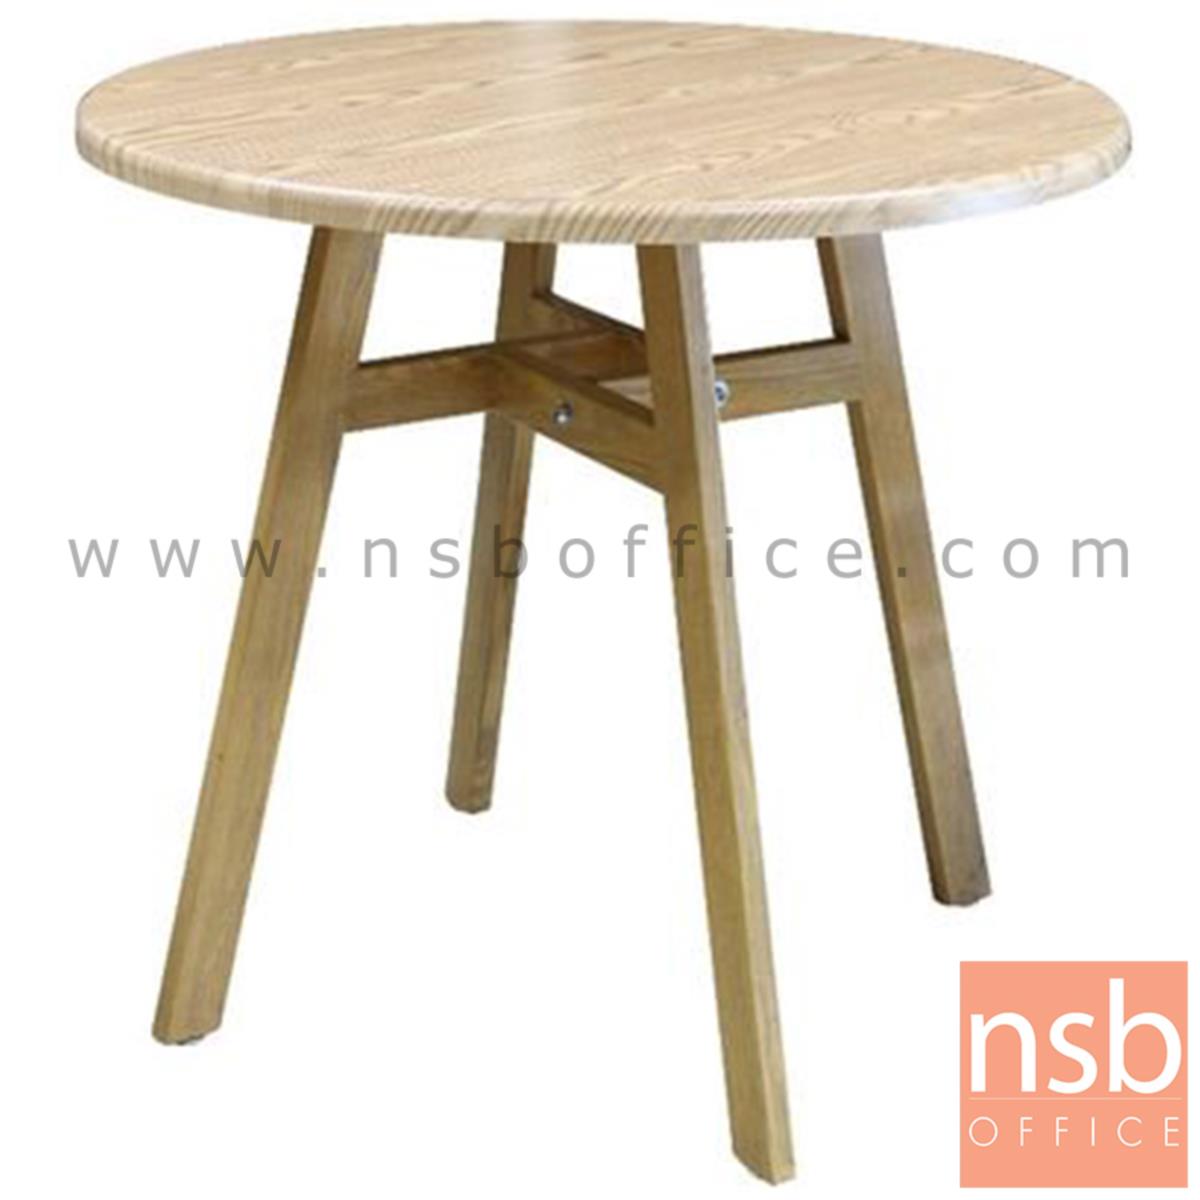 A14A235:โต๊ะกลมไม้ยางพารา รุ่น MONTREUX (มงเทรอ) ขนาด 80Di cm. 